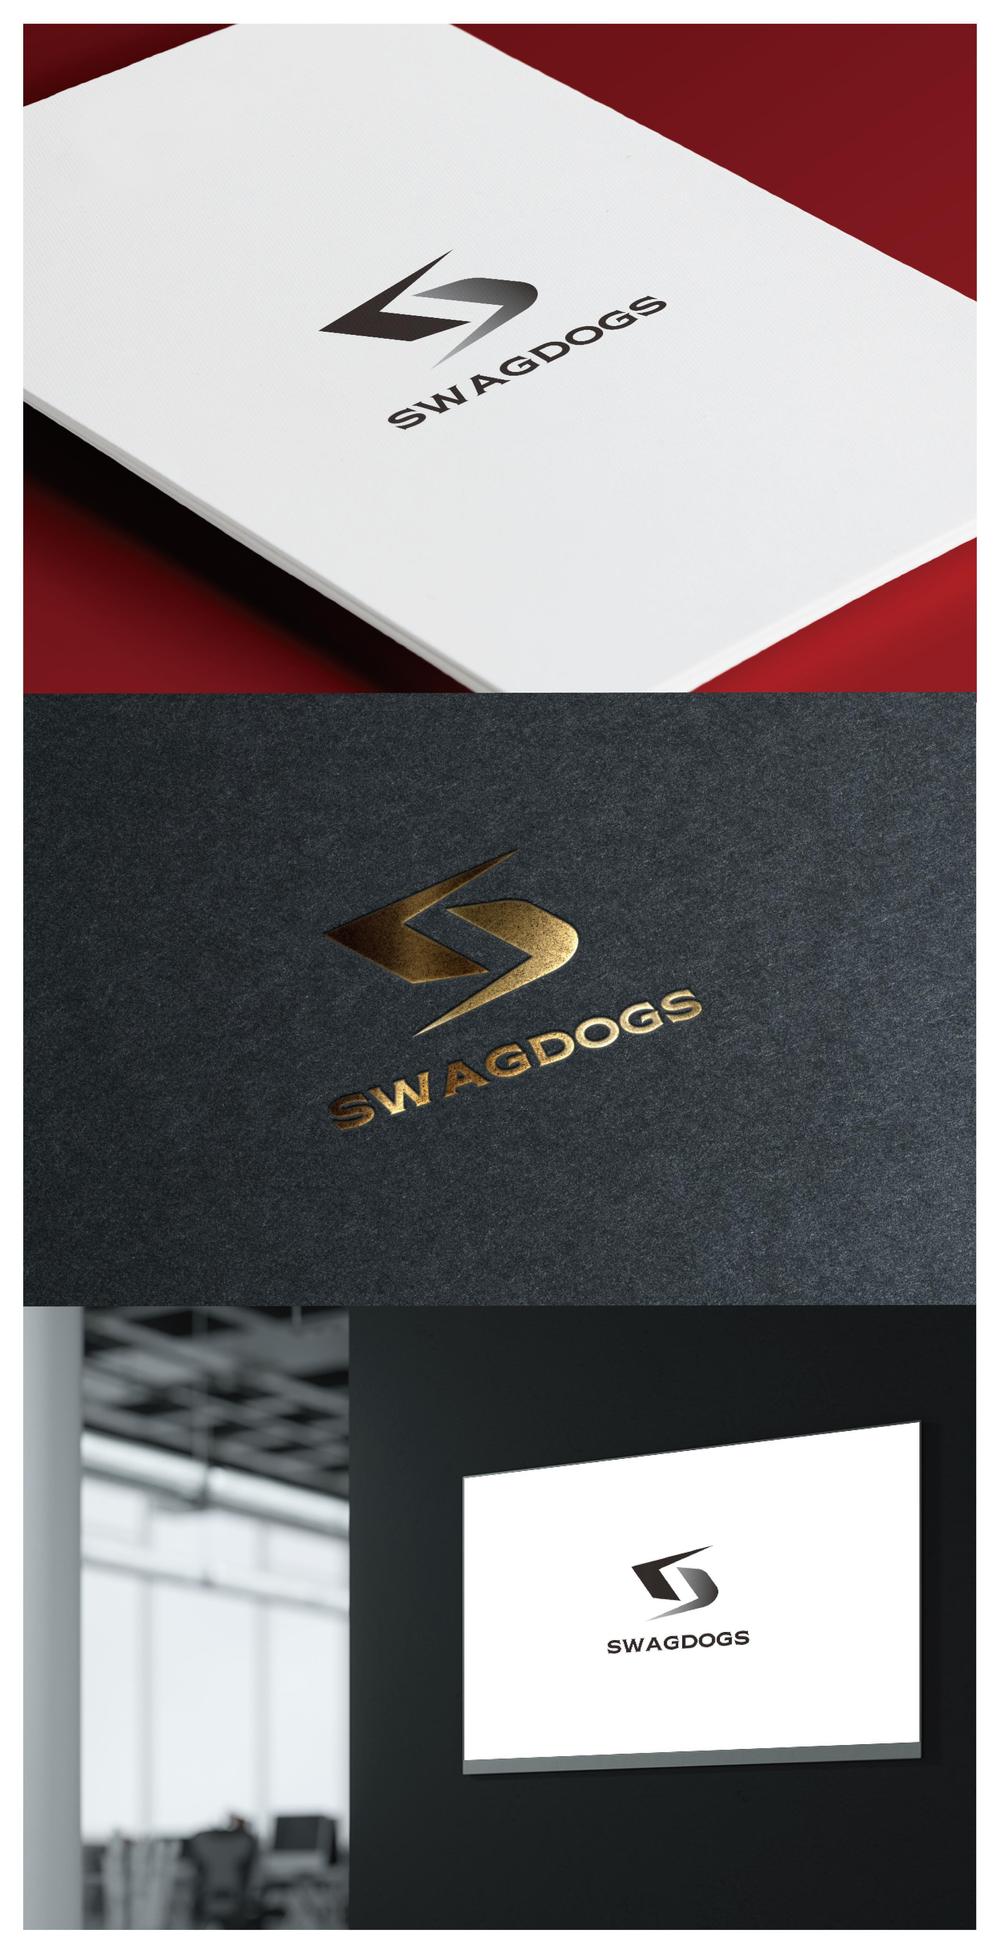 SWAGDOGS_logo01_01.jpg